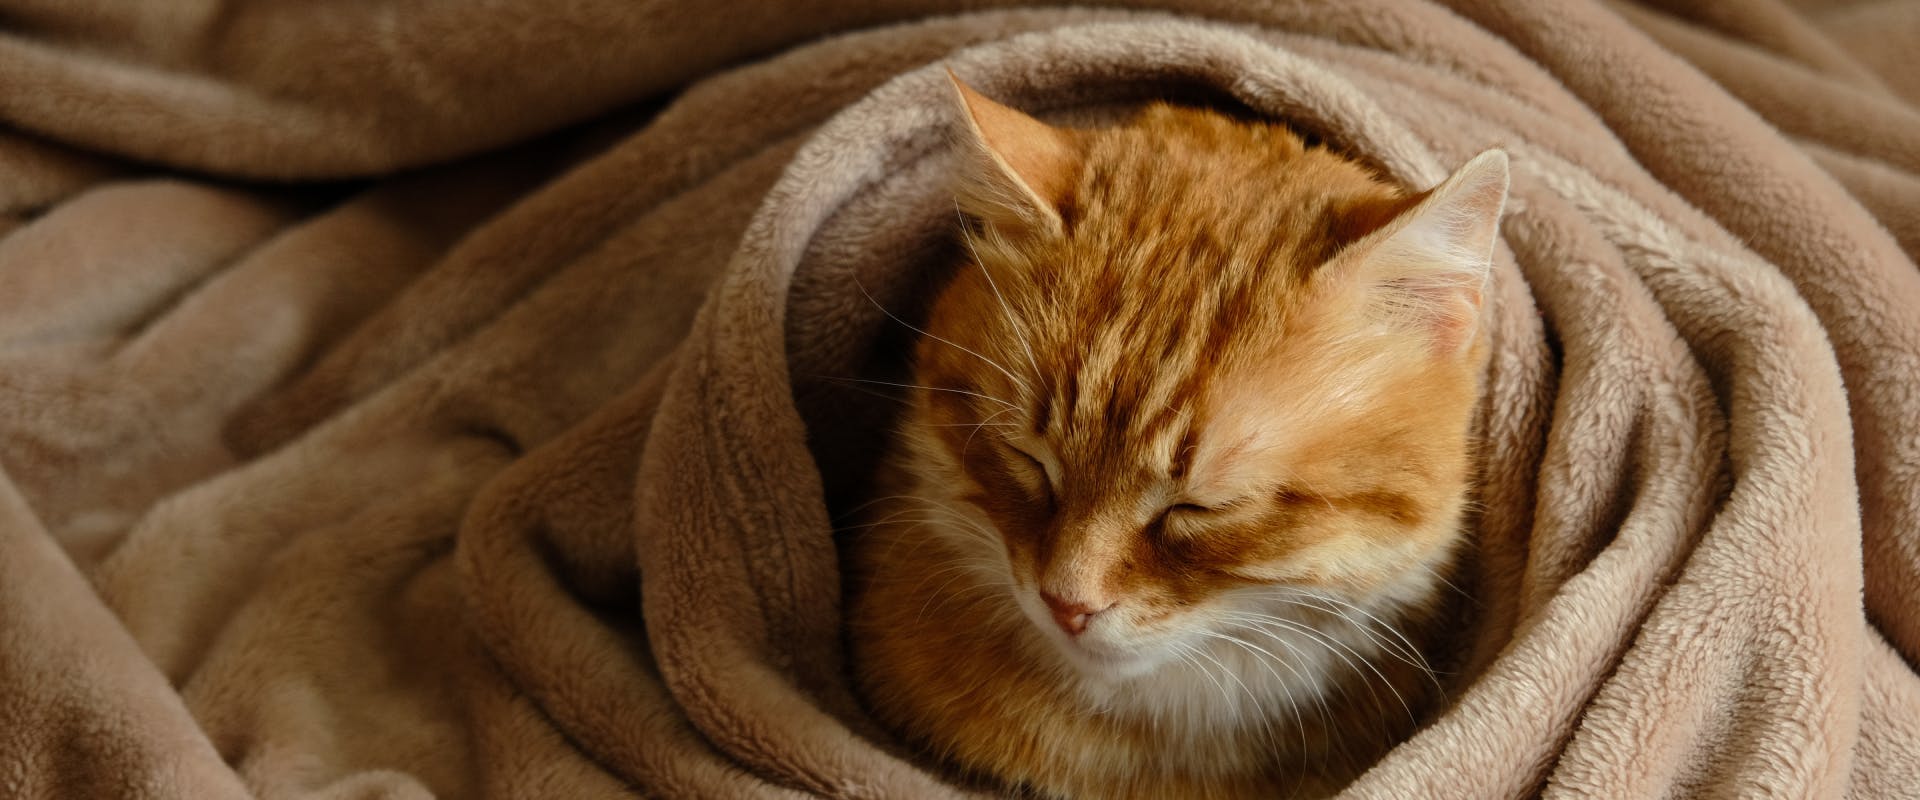 An older cat snuggled in a blanket.